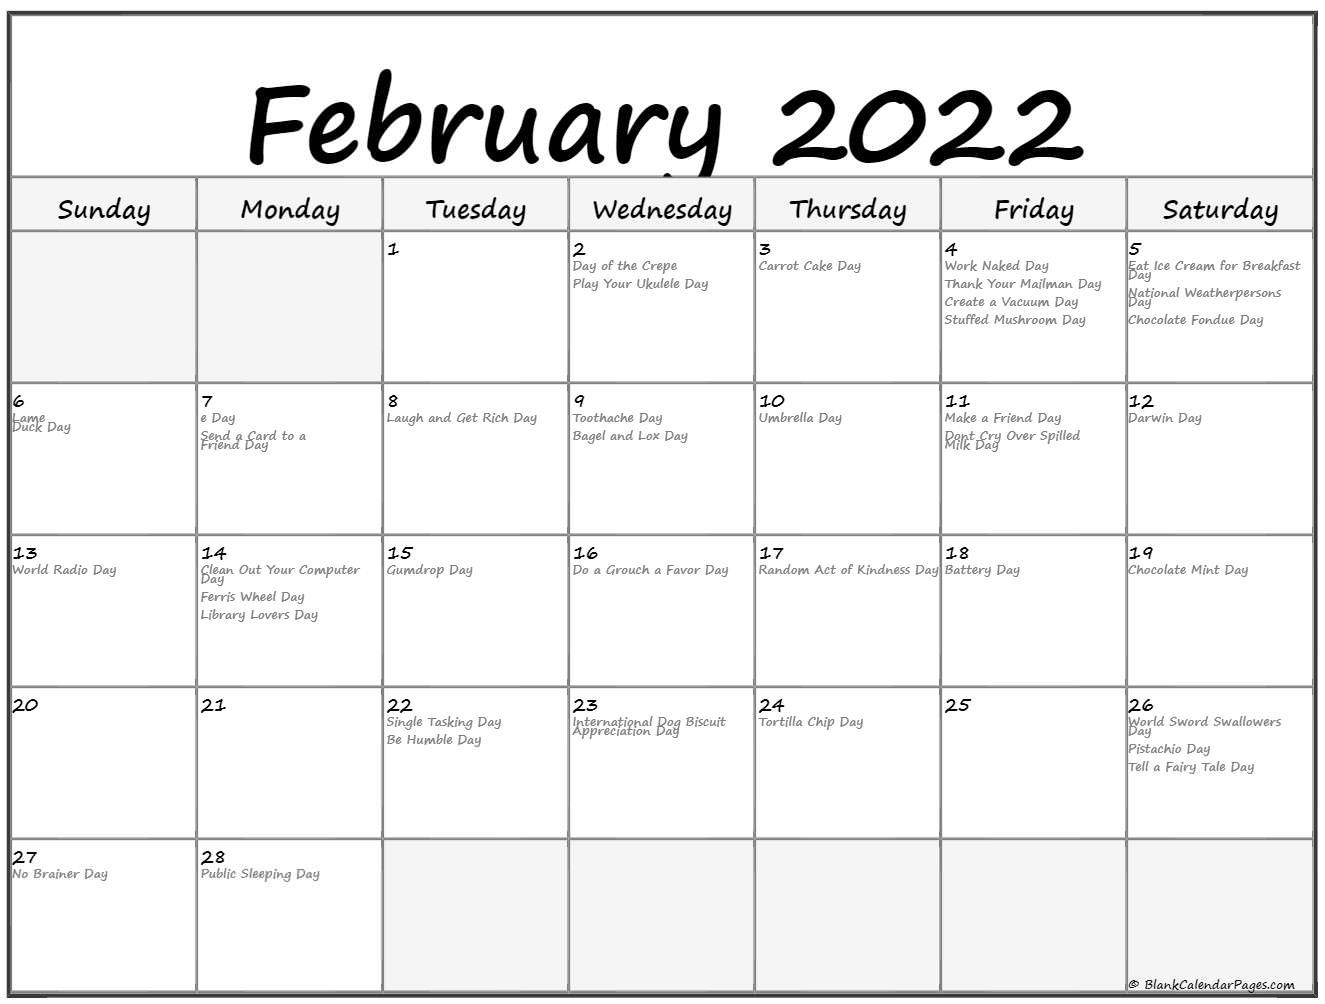 February 2022 With Holidays Calendar-Time And Date Calendar Canada 2022